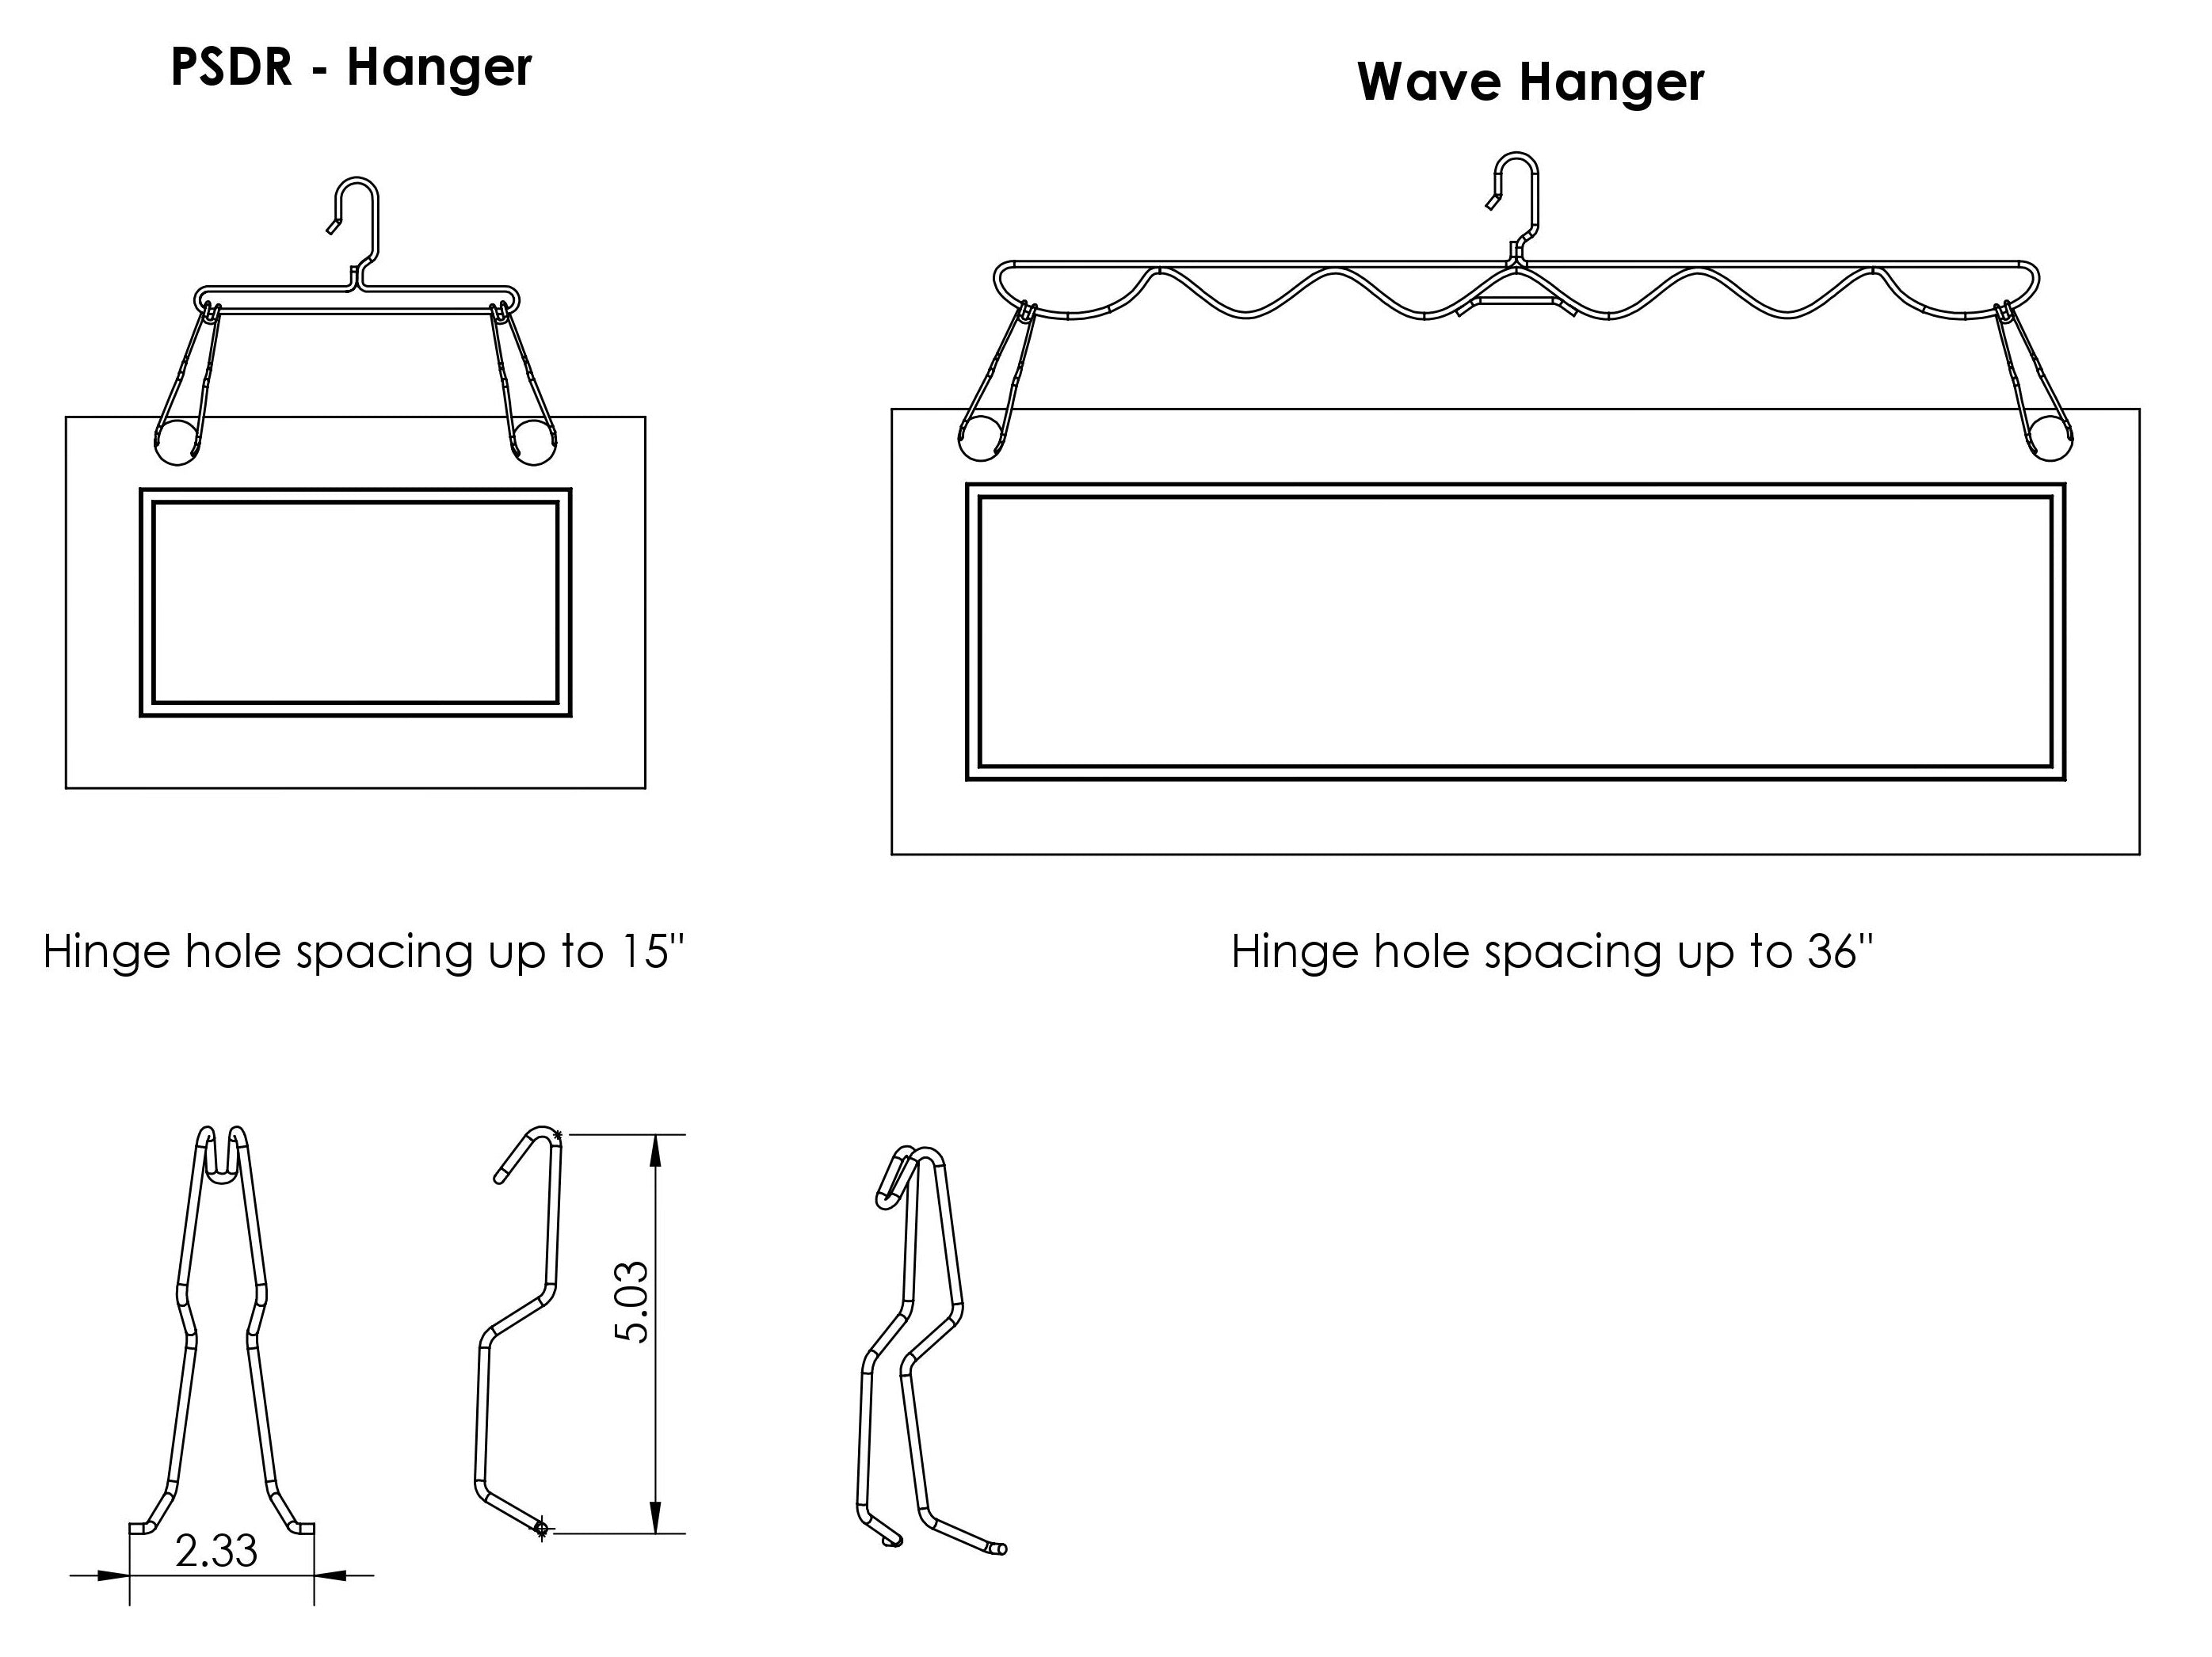 Wave Hangers for PSDR